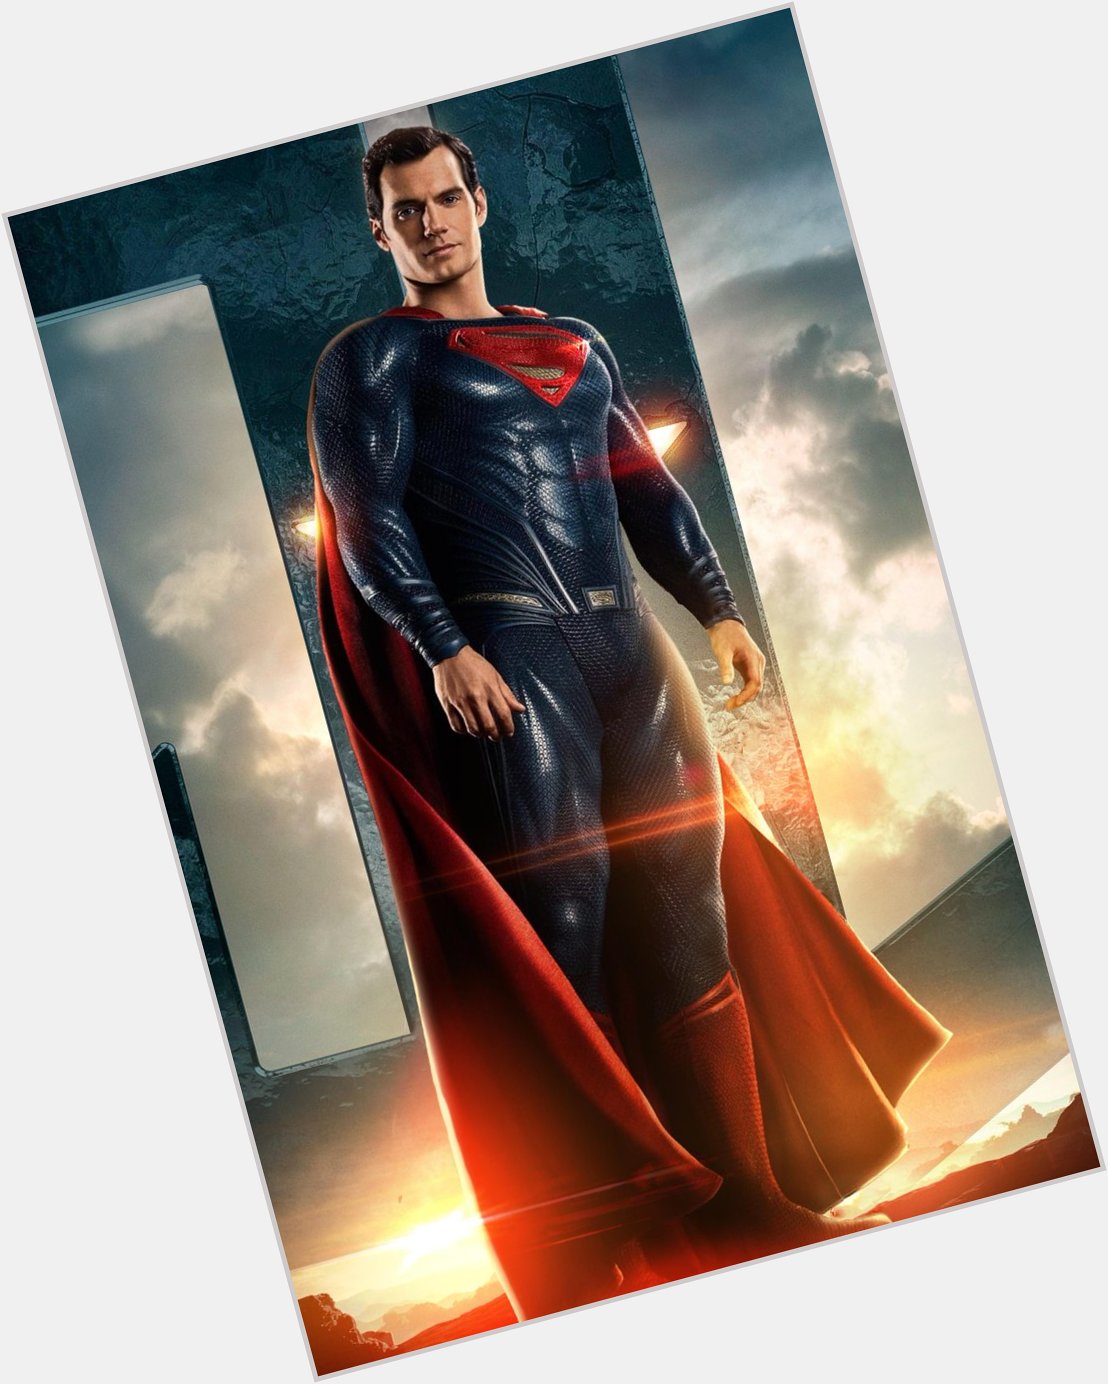 Happy Birthday to Superman himself, the great Henry Cavill. 